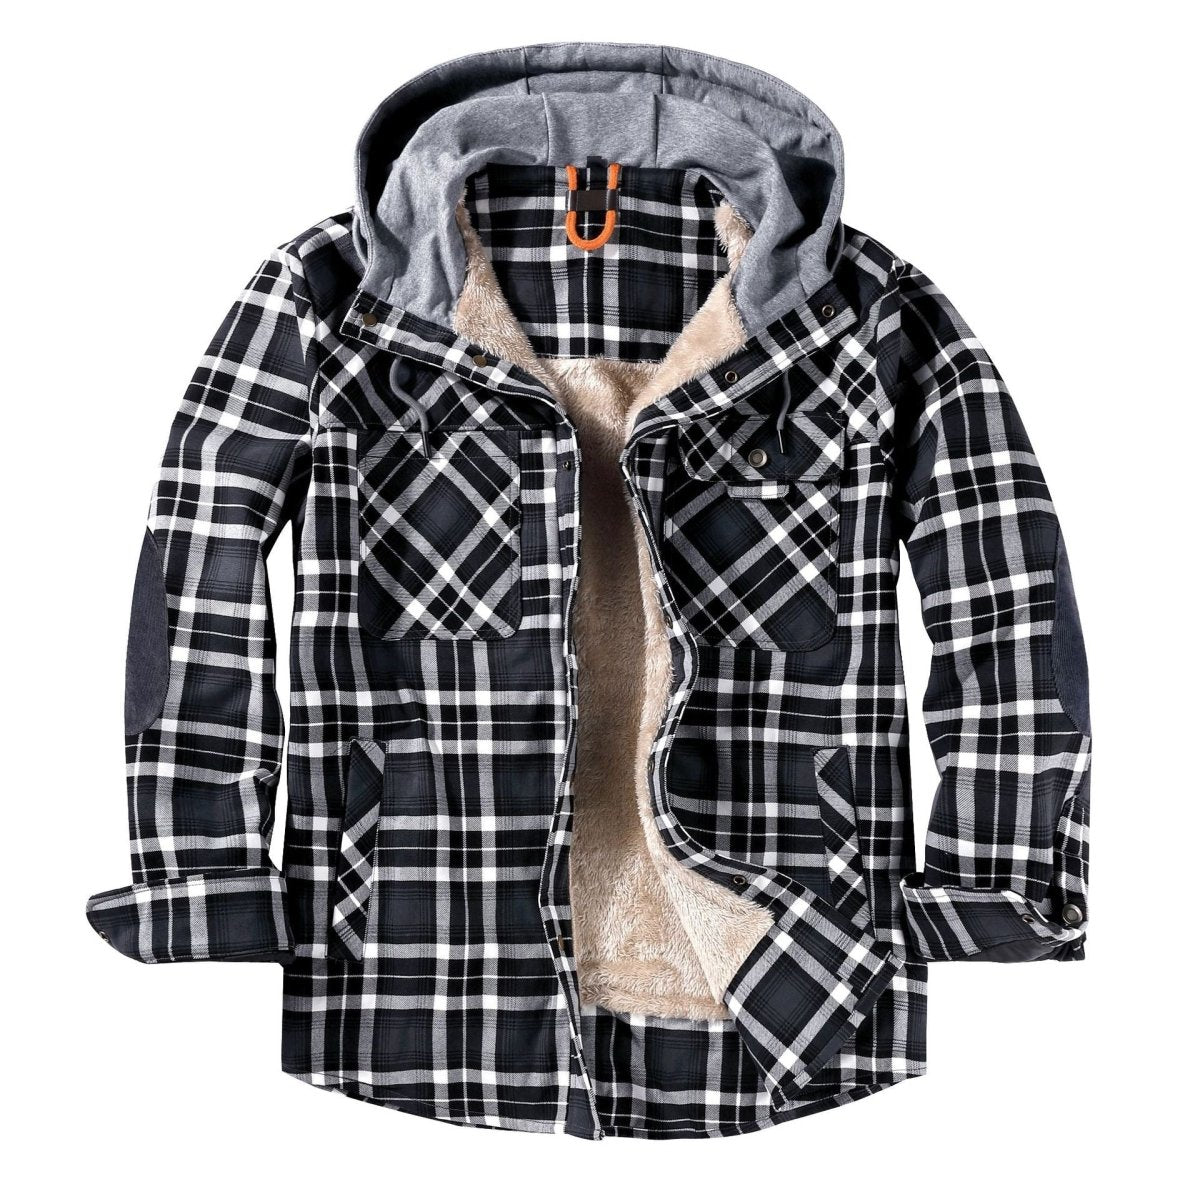 Mens Fleece Lining Basic Shirt Jacket With Hood - Geeksoutfit